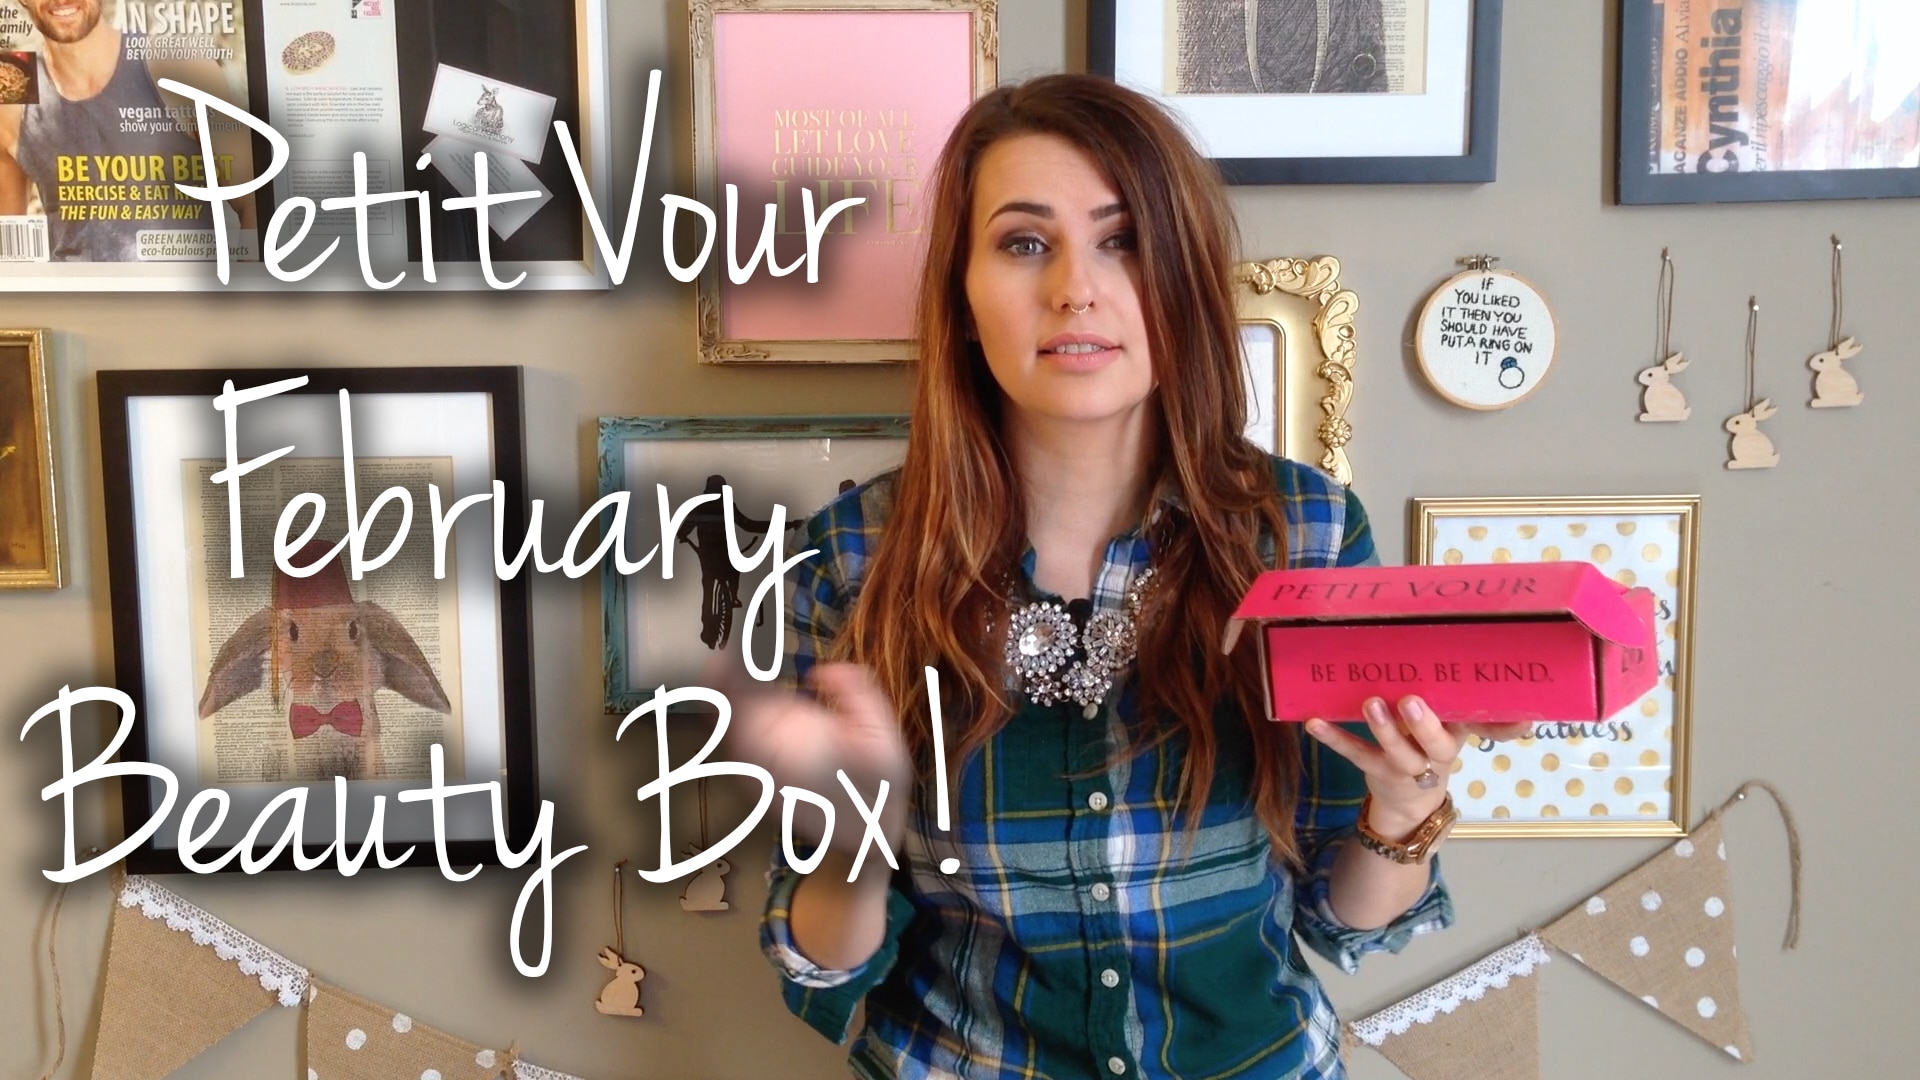 Petit Vour February 2015 Beauty Box Video